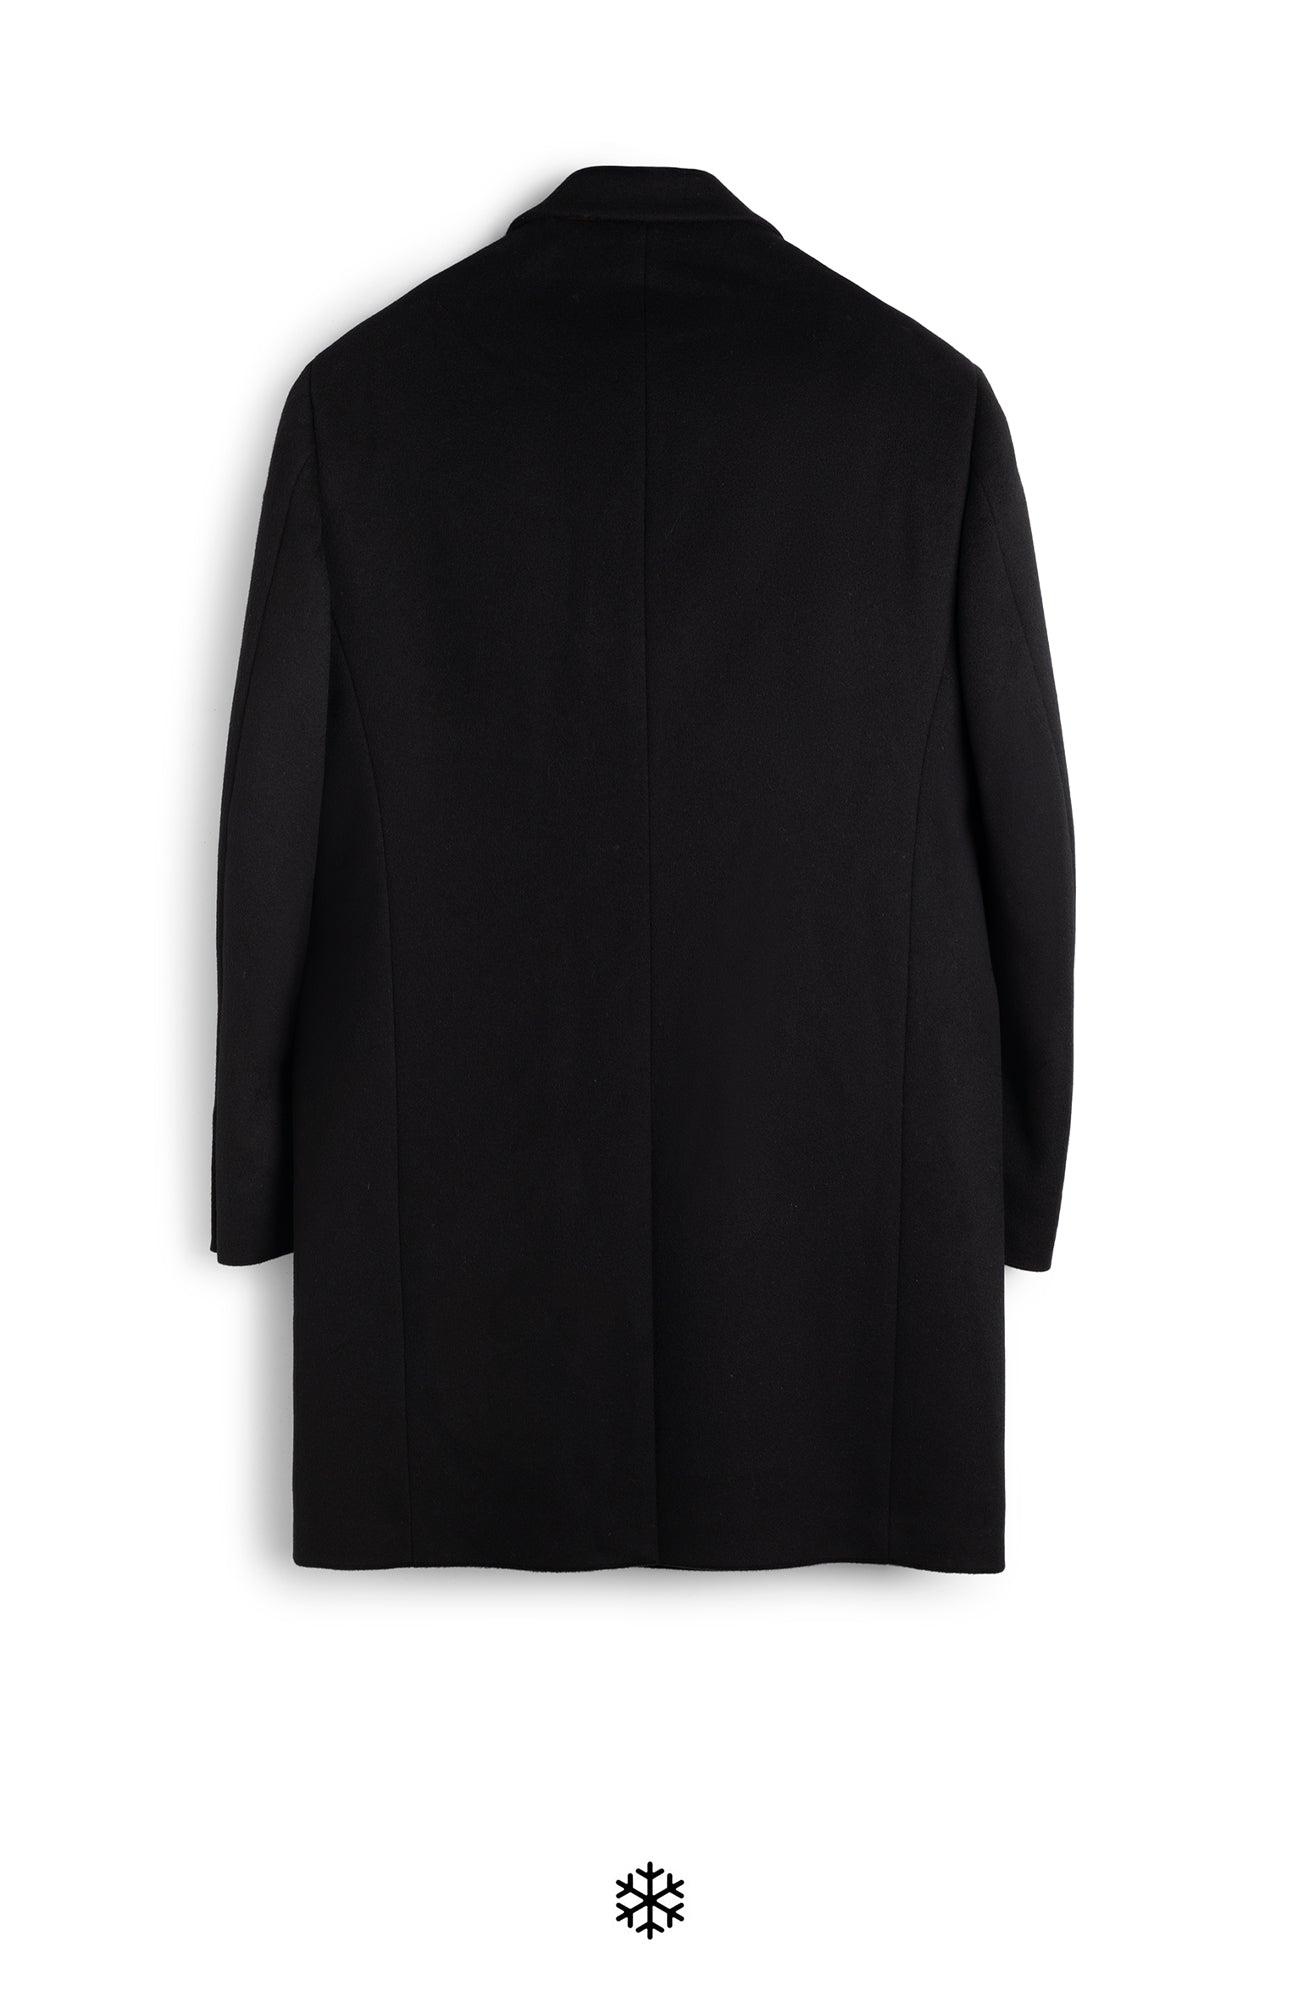 SUTTON BLACK WOOL OVERCOAT - Dress - Cardinal of Canada - CA - Sutton - Black wool topcoat 38 inch length